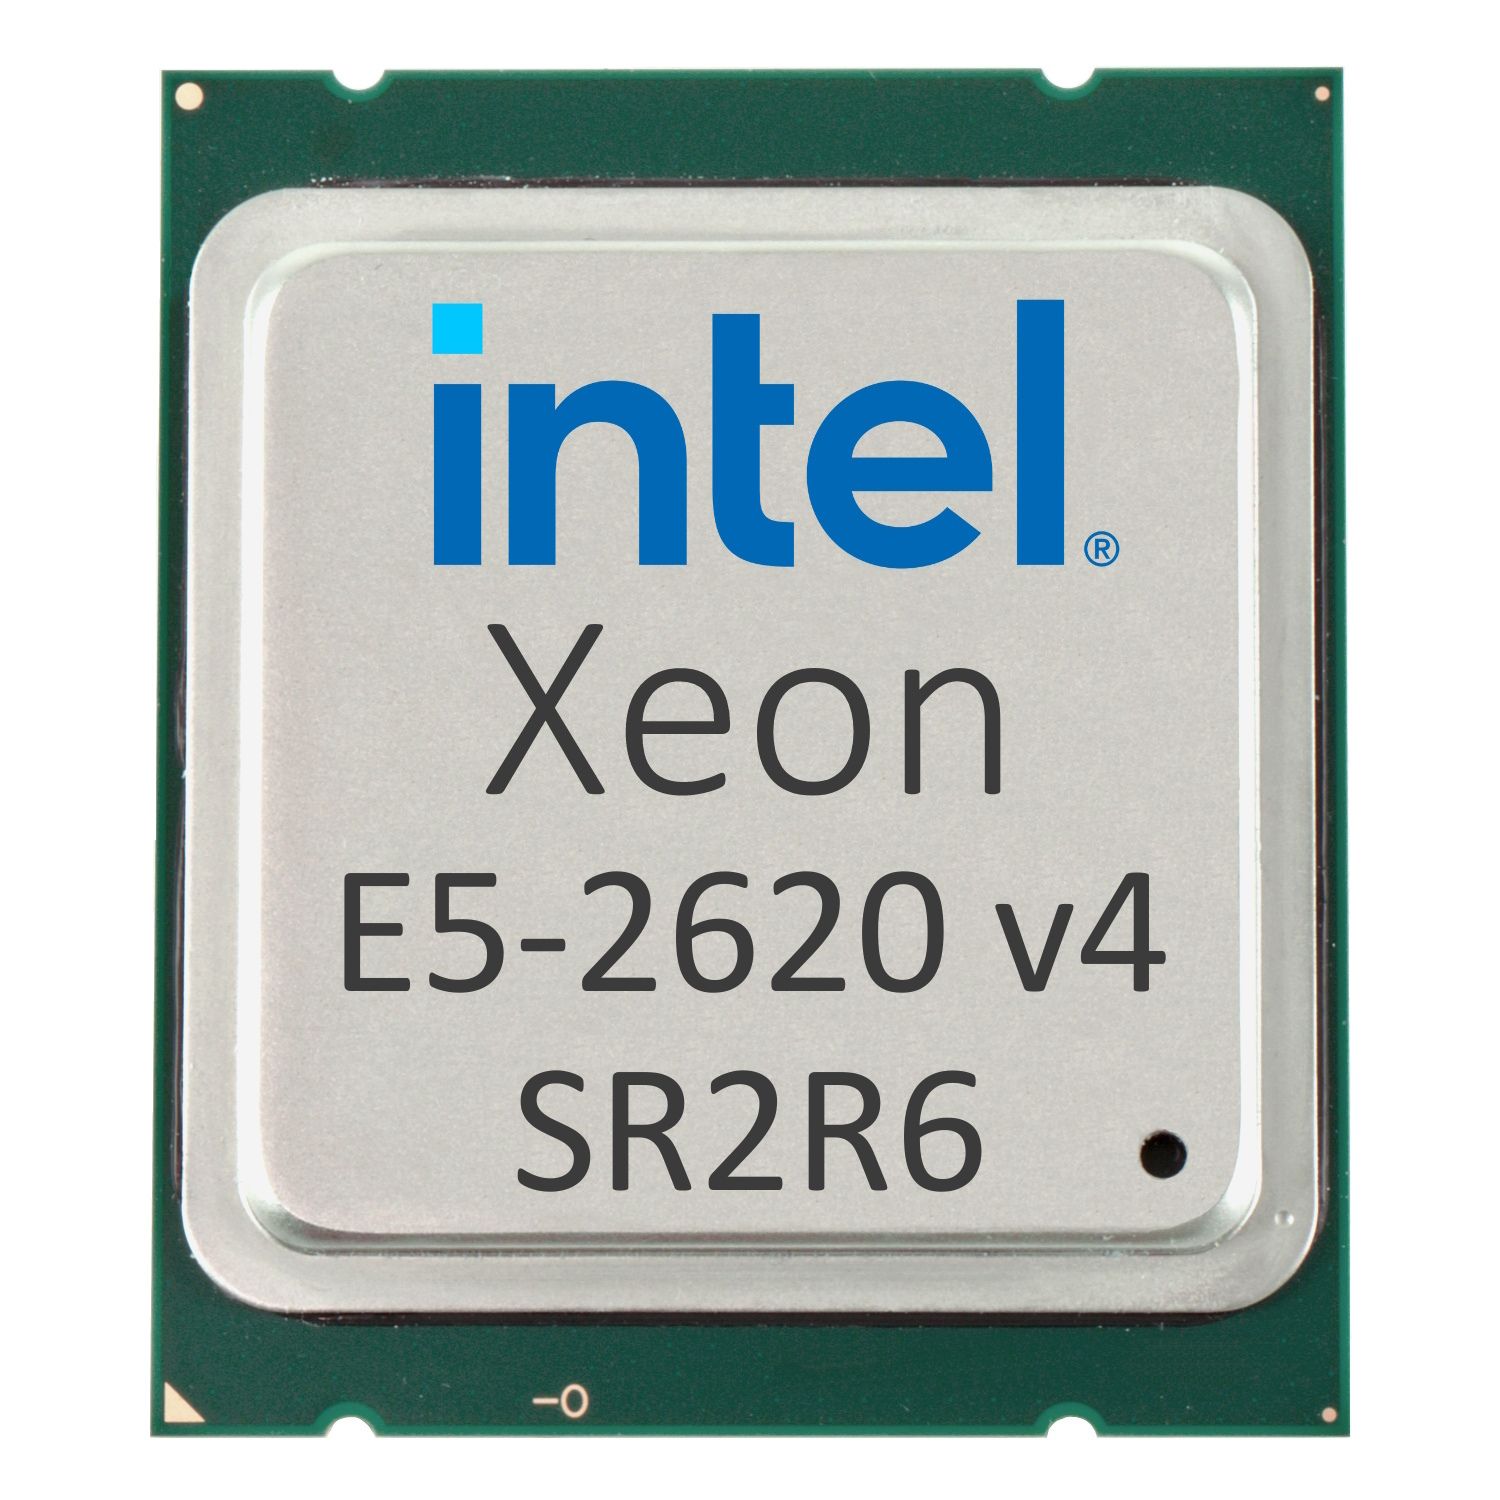 Intel Xeon E5-2620 v4 2.10GHz 20MB 8-Core CPU 85W SR2R6 CM8066002032201